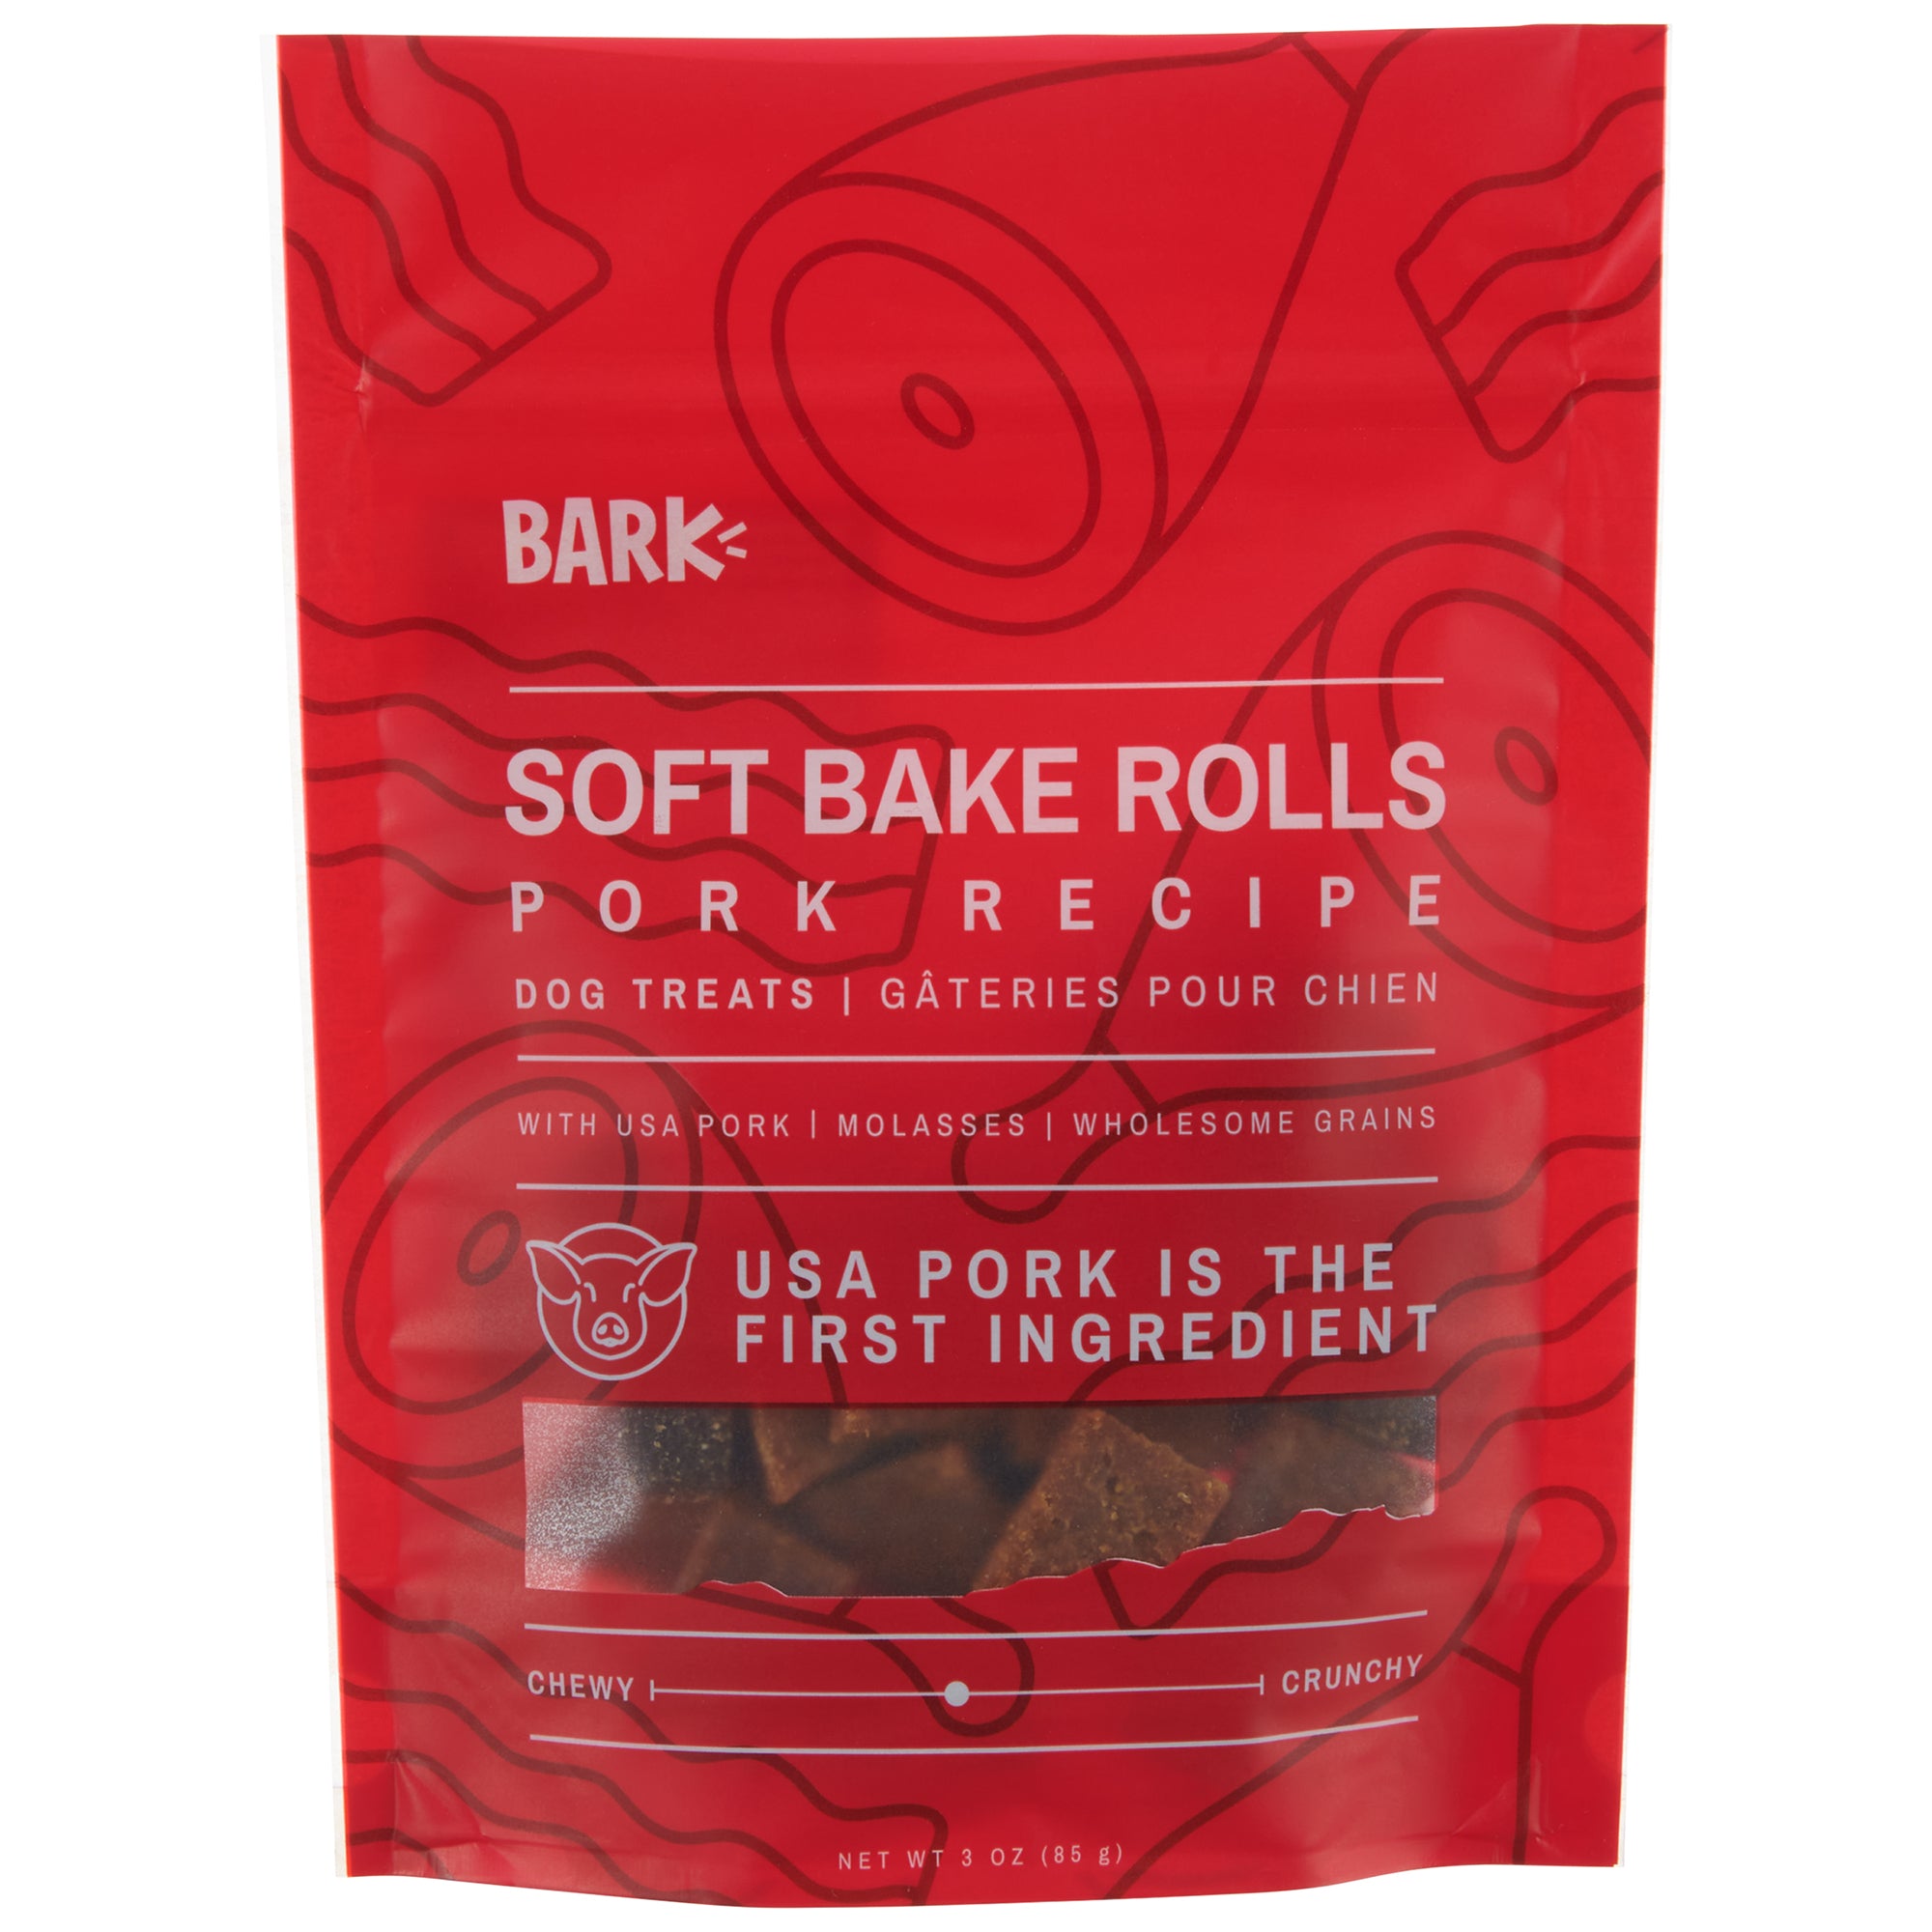 Soft Bake Rolls - Pork Recipe